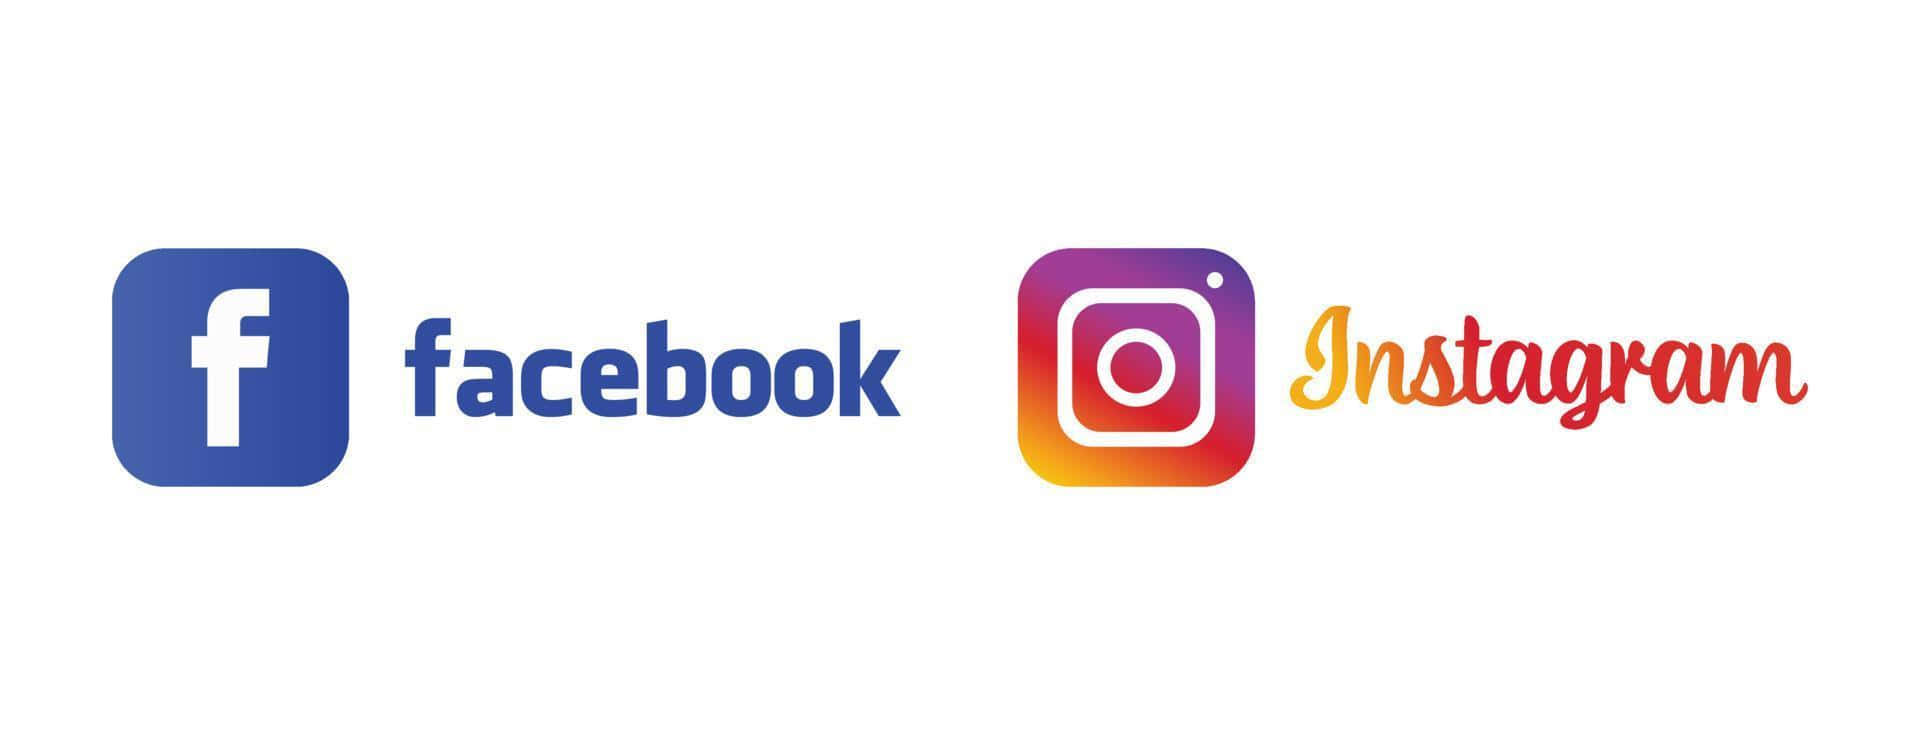 Imagende Logotipo De Facebook E Instagram